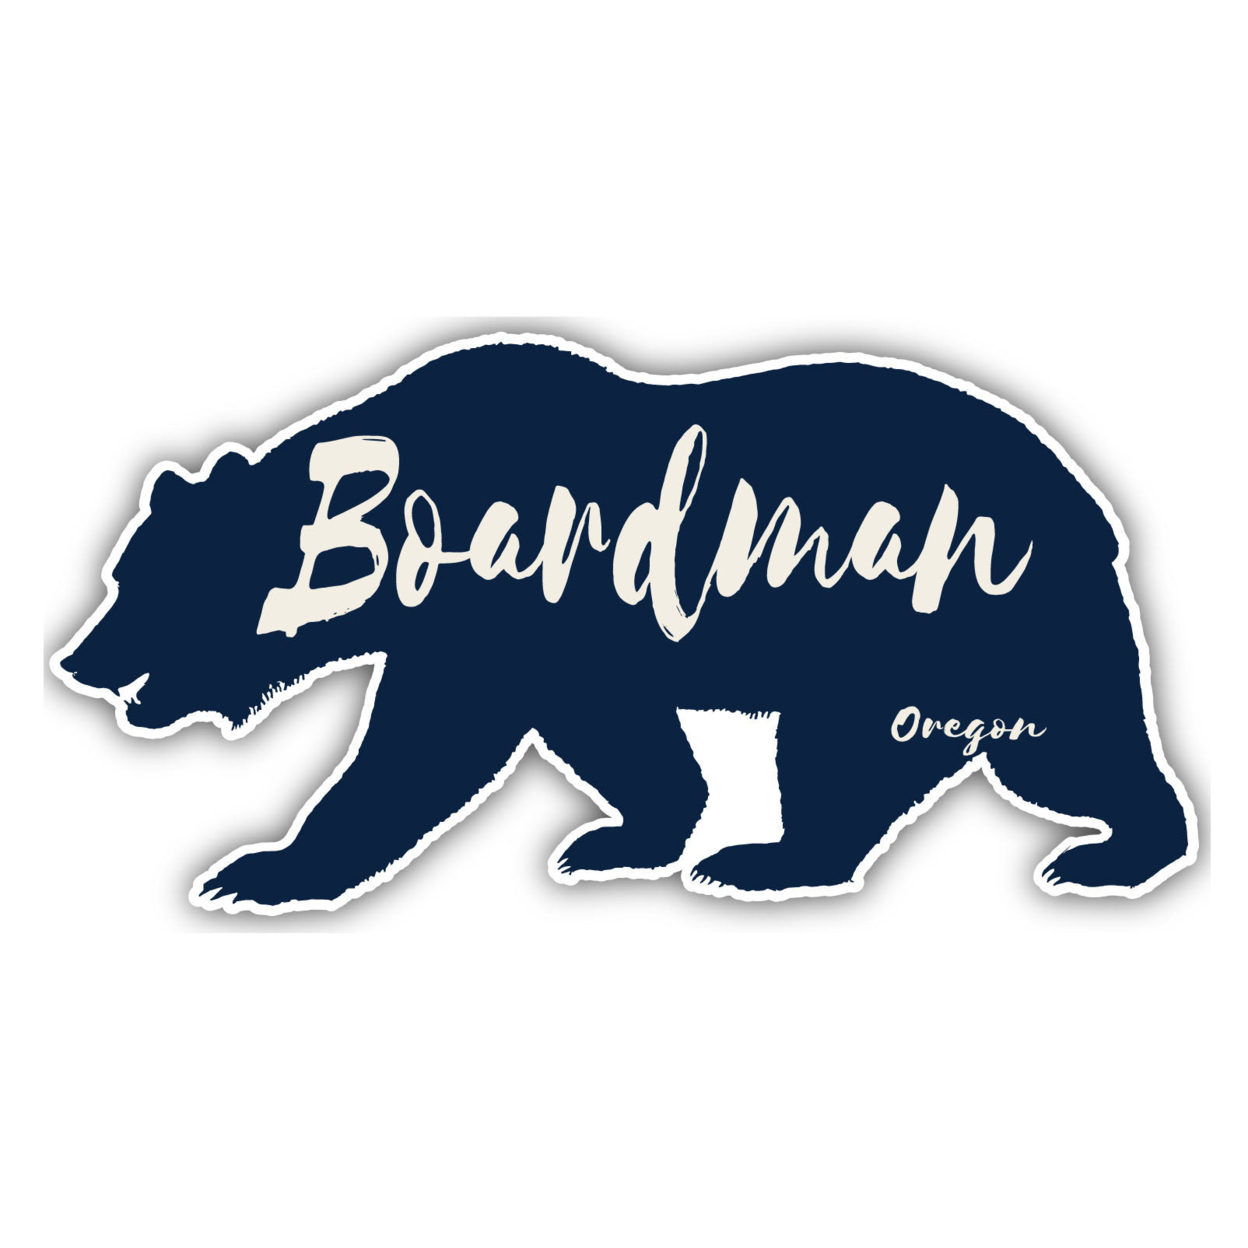 Boardman Oregon Souvenir Decorative Stickers (Choose Theme And Size) - 4-Pack, 8-Inch, Camp Life